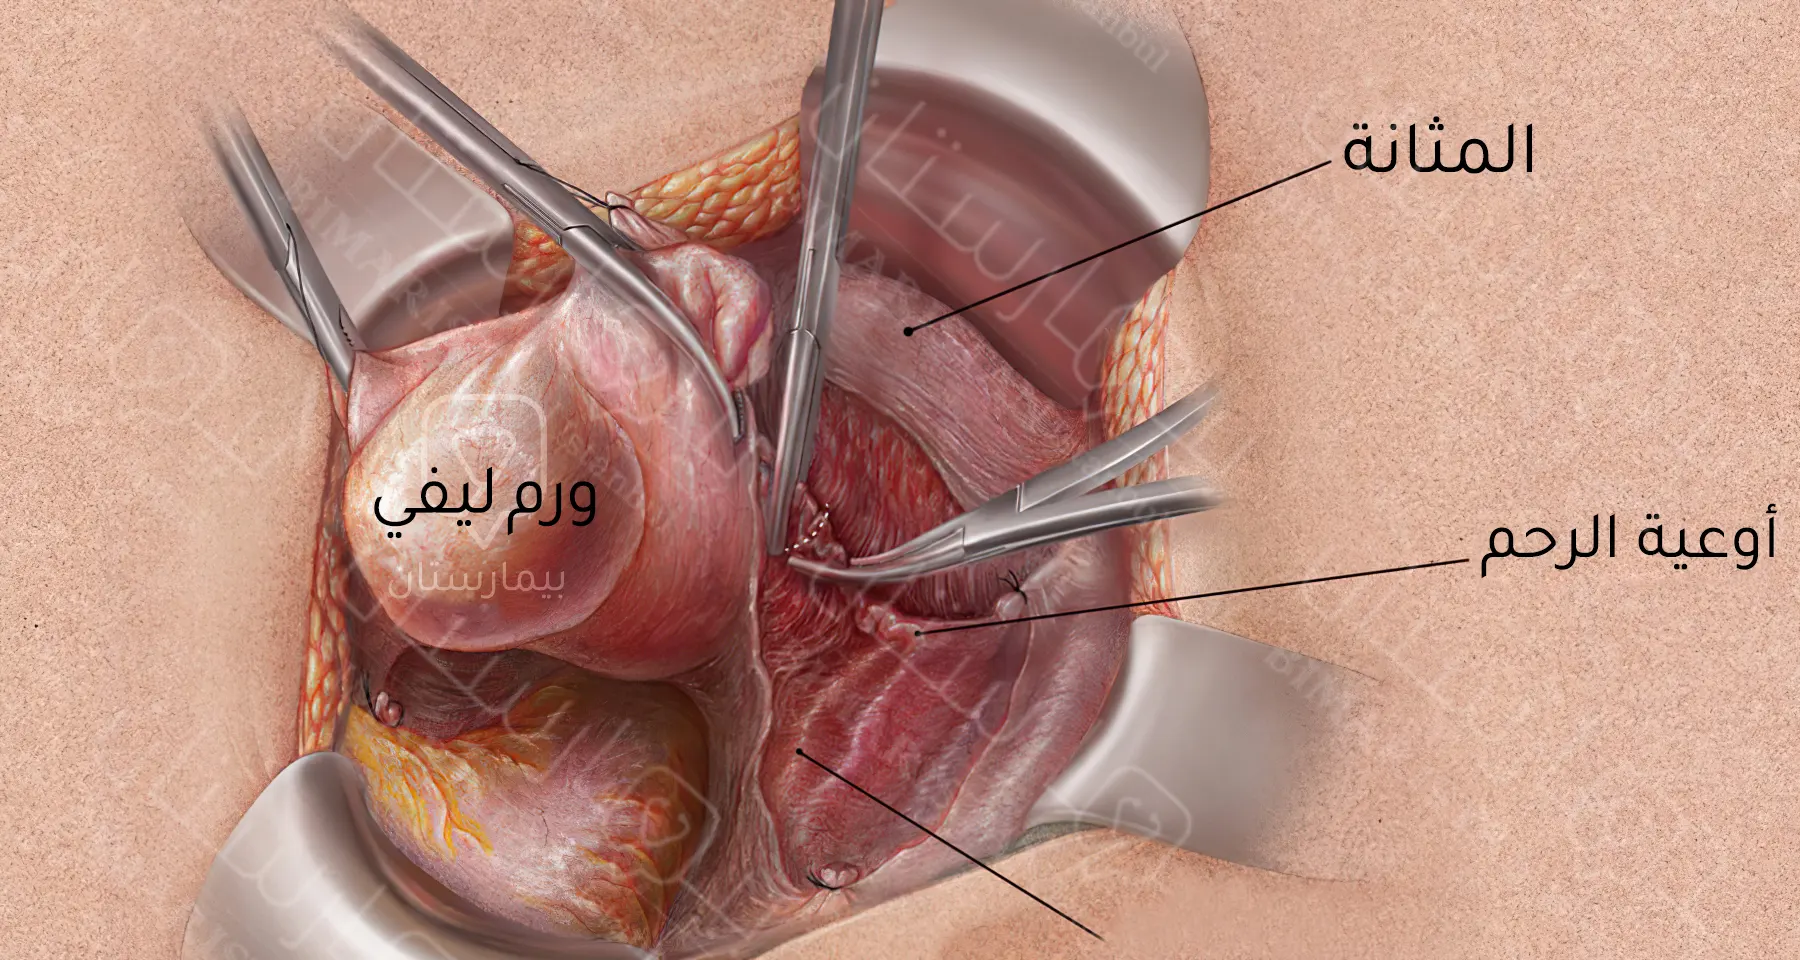 Abdominal hysterectomy